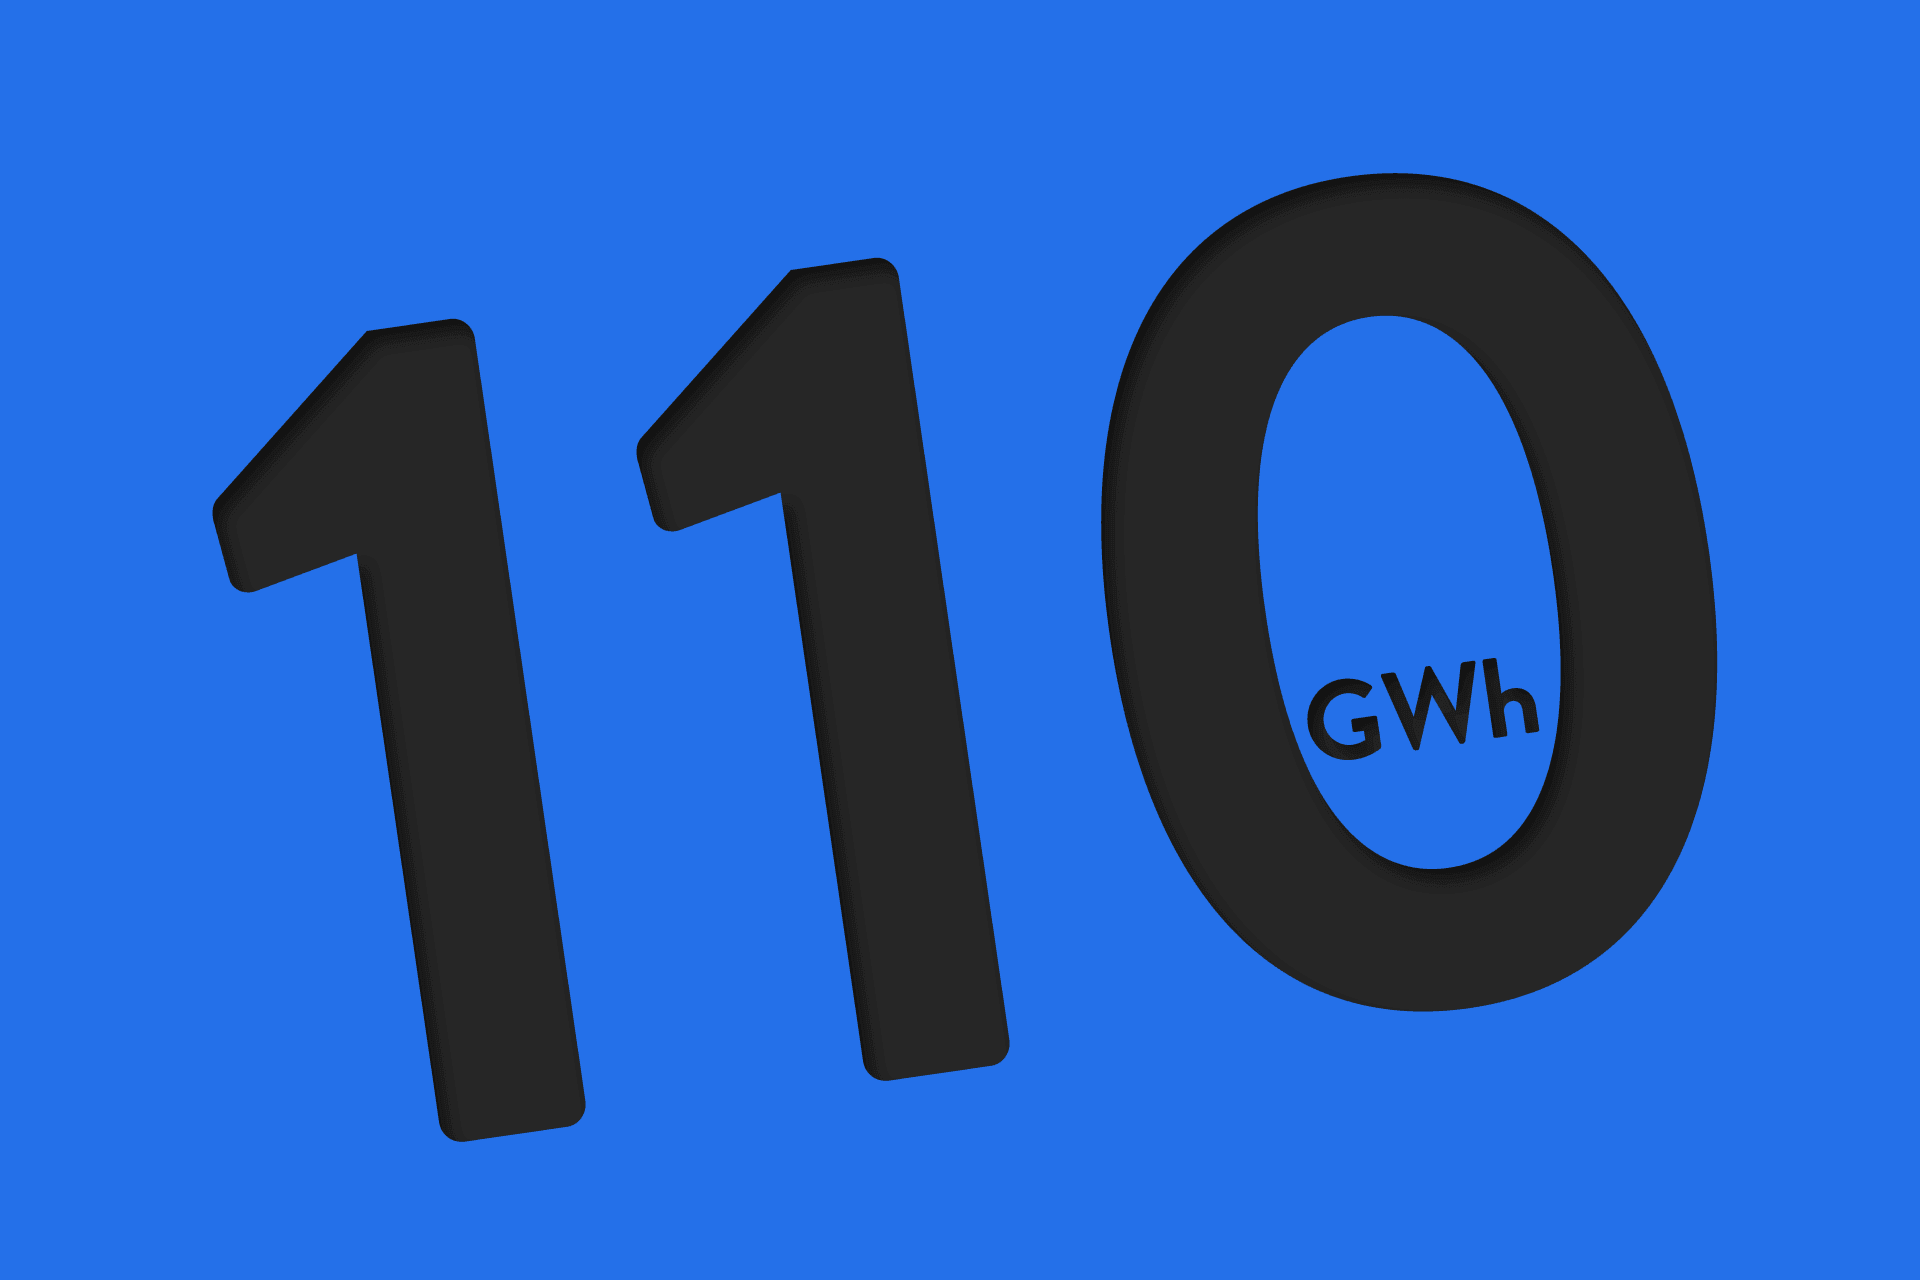 110 GWh